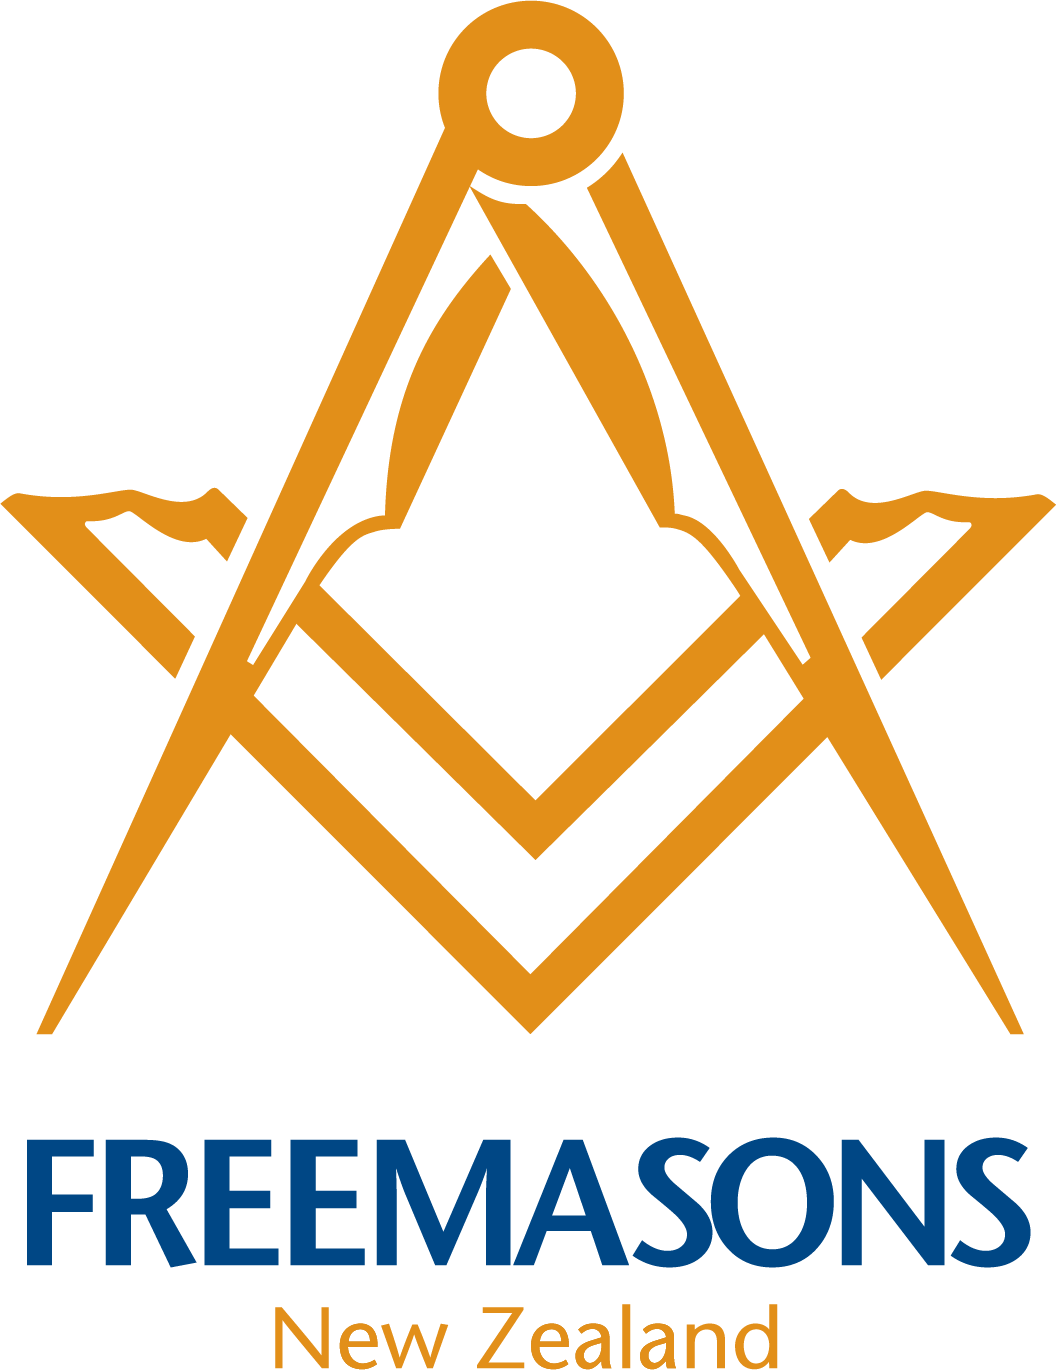 Transparent / No Background Logos - Freemasons Victoria (1056x1370)